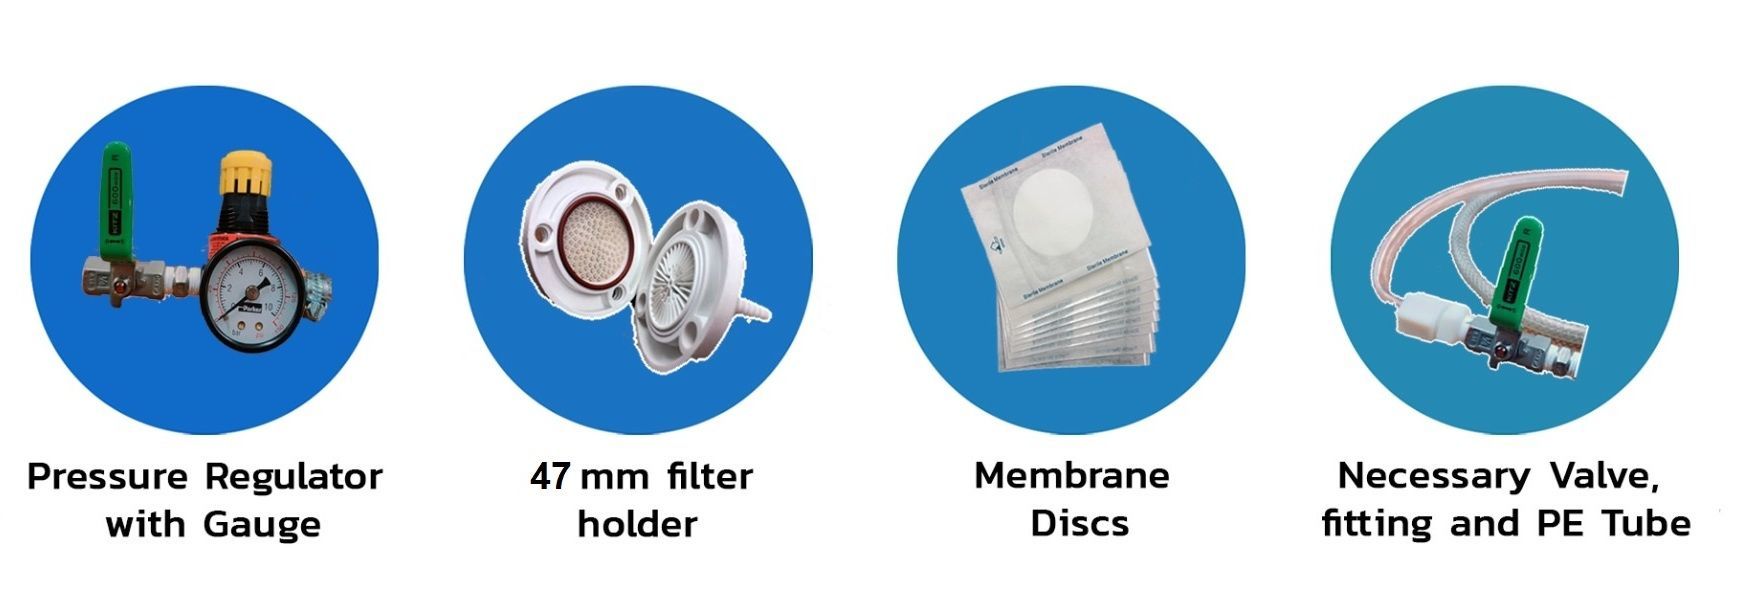   “MAY” SDI Test Kit ประกอบไปด้วย  Pressure Regulator with Gauge  47 mm filter holder  membrane  dis